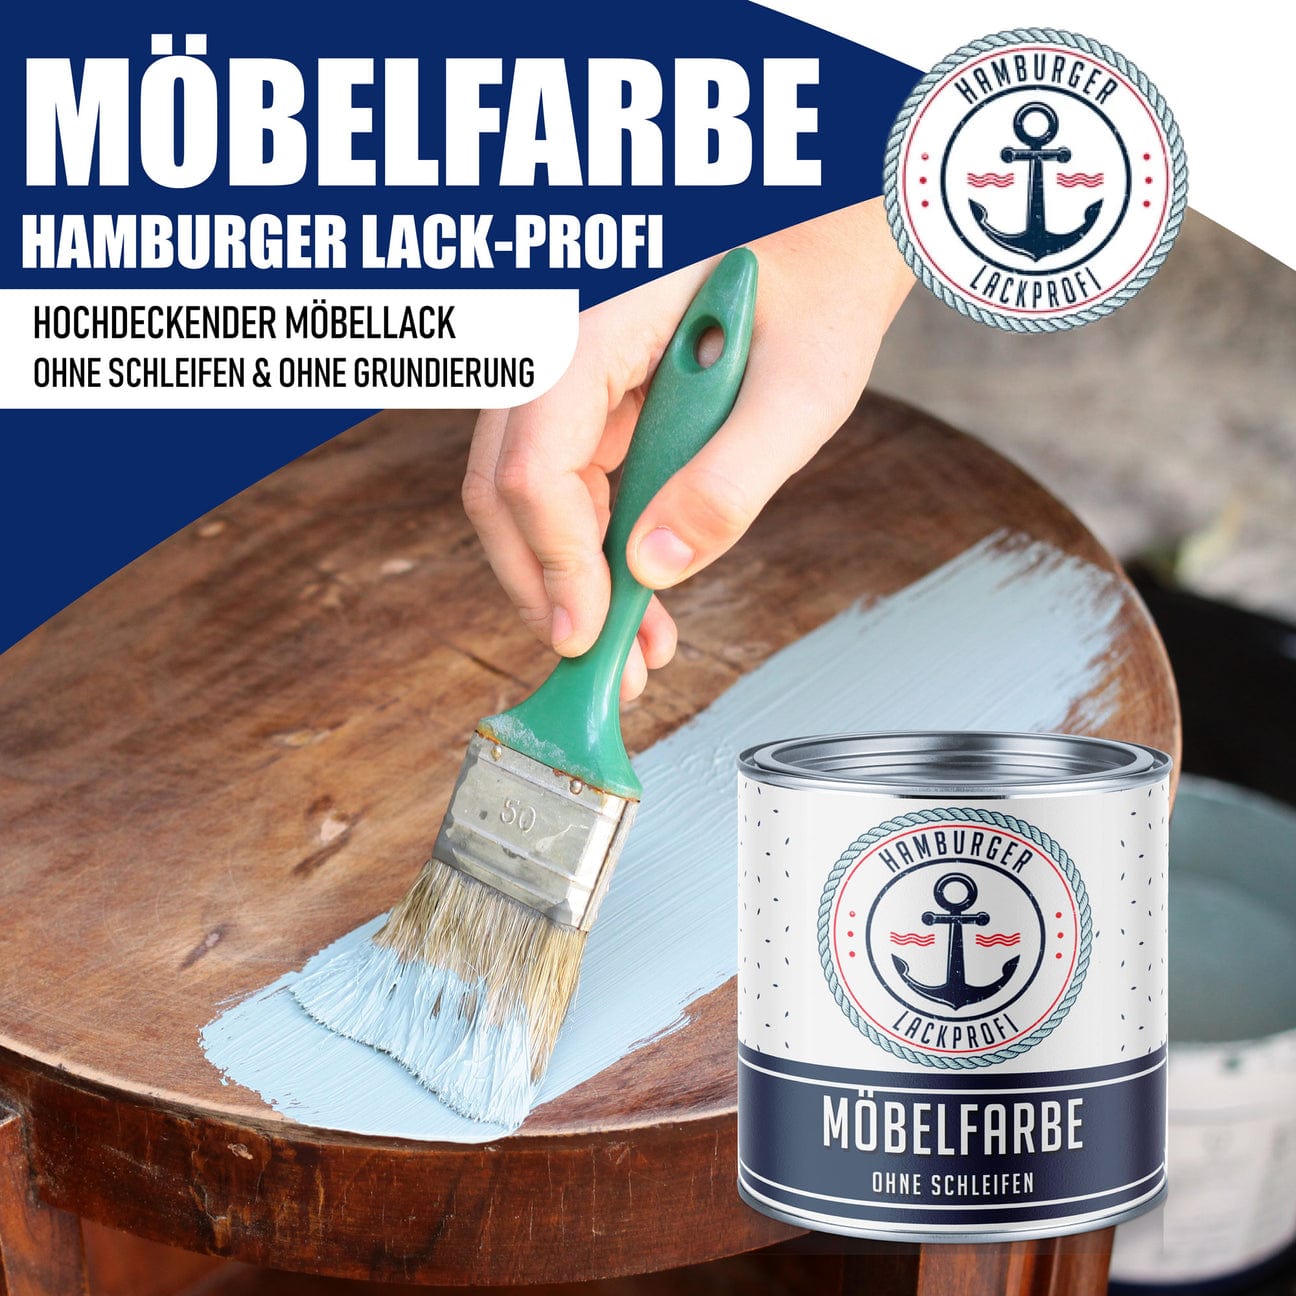 Hamburger Lack-Profi Möbelfarbe ohne Schleifen RAL 6016 Türkisgrün - Möbellack Hamburger Lack-Profi